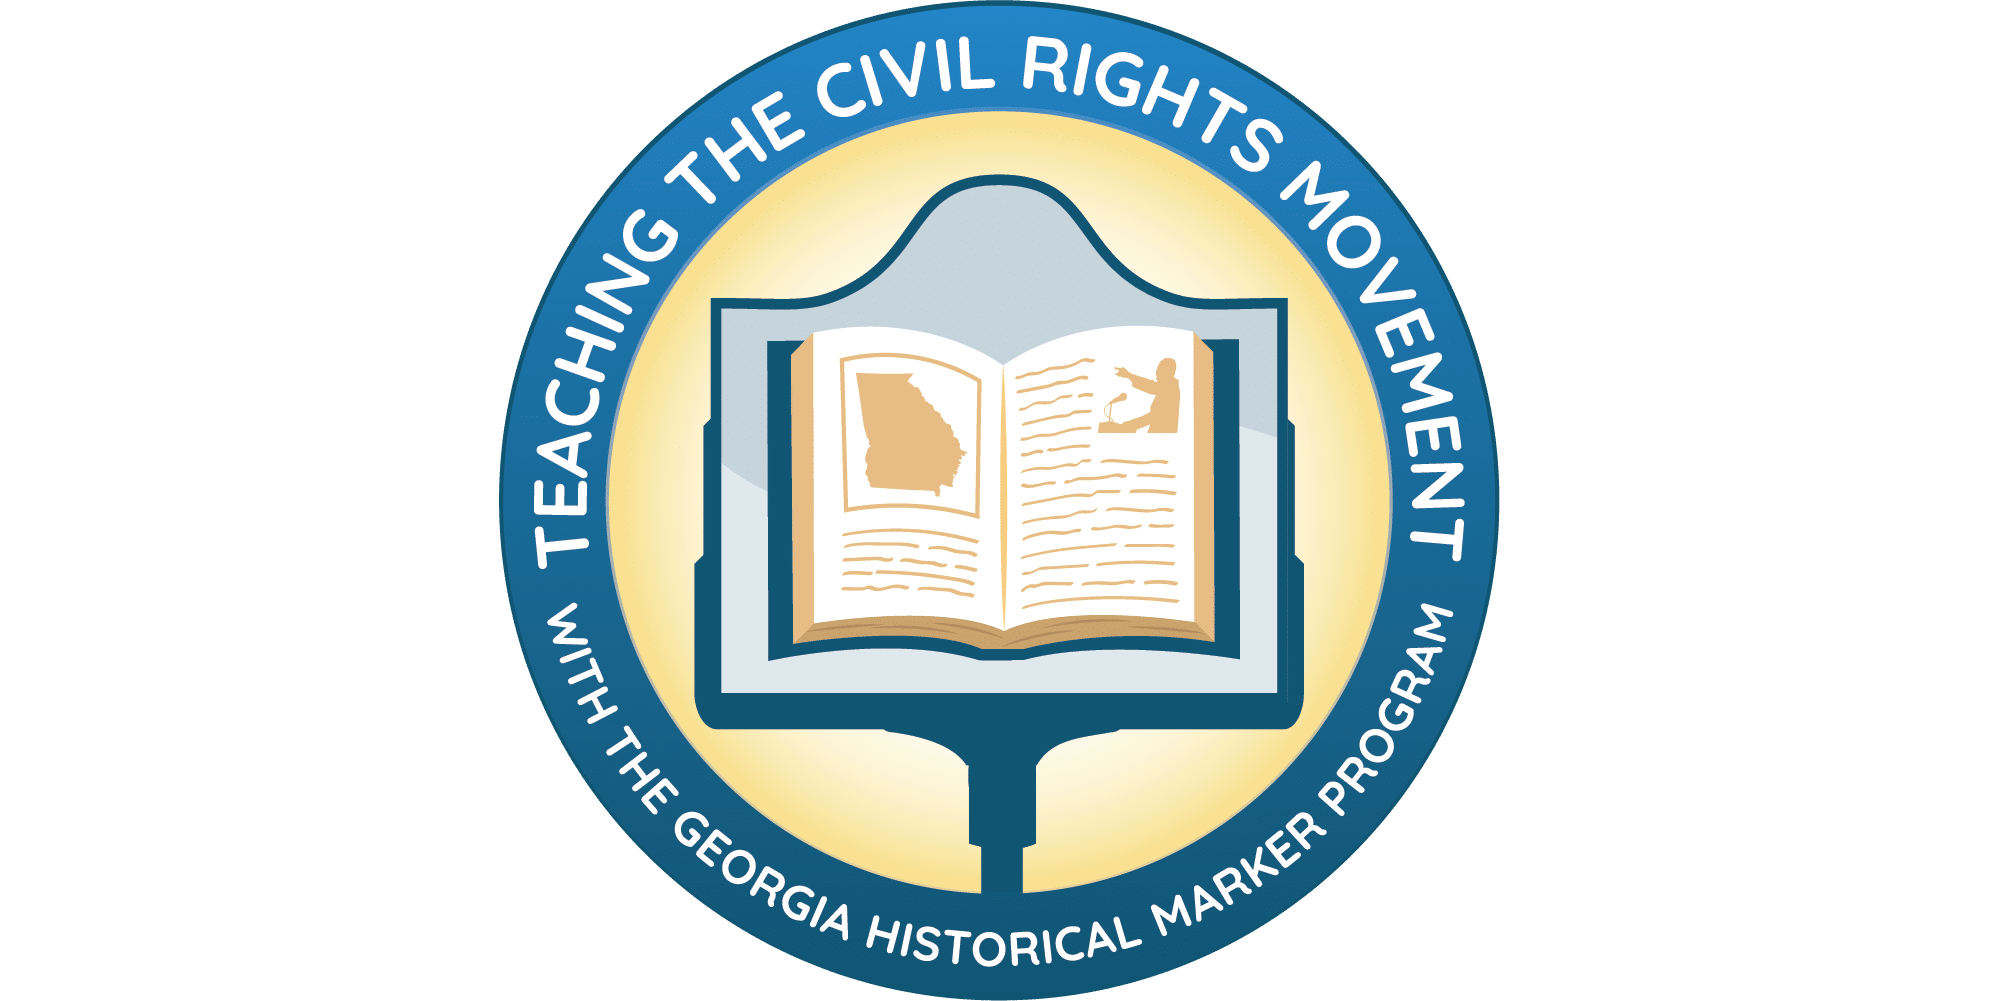 Teaching the Civil Rights Movement